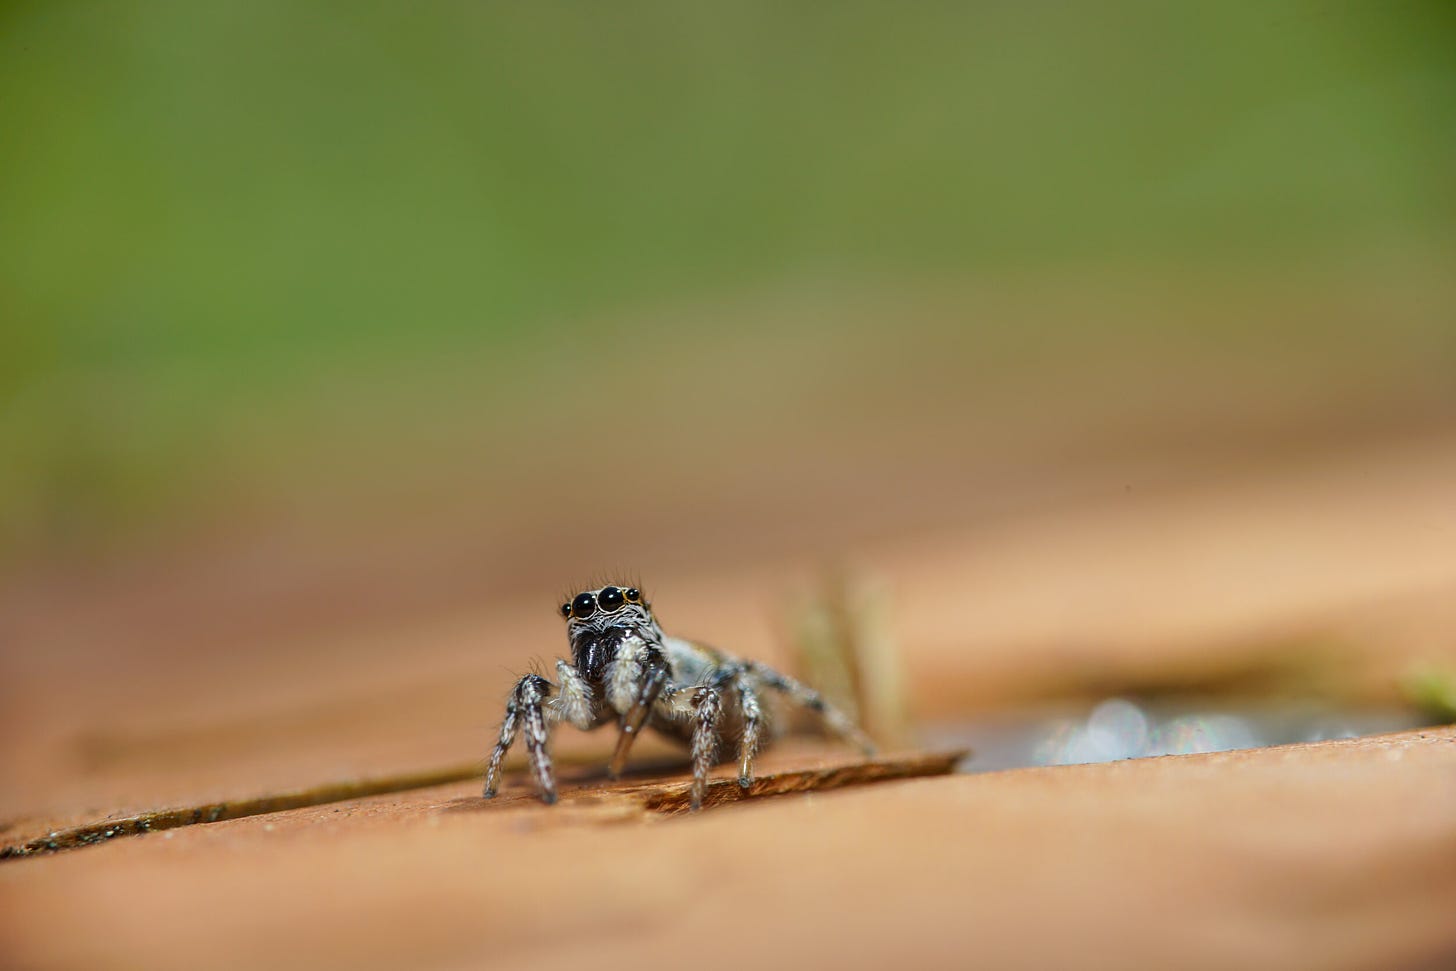 A Zebra Jumping Spider, Salticus scenicus